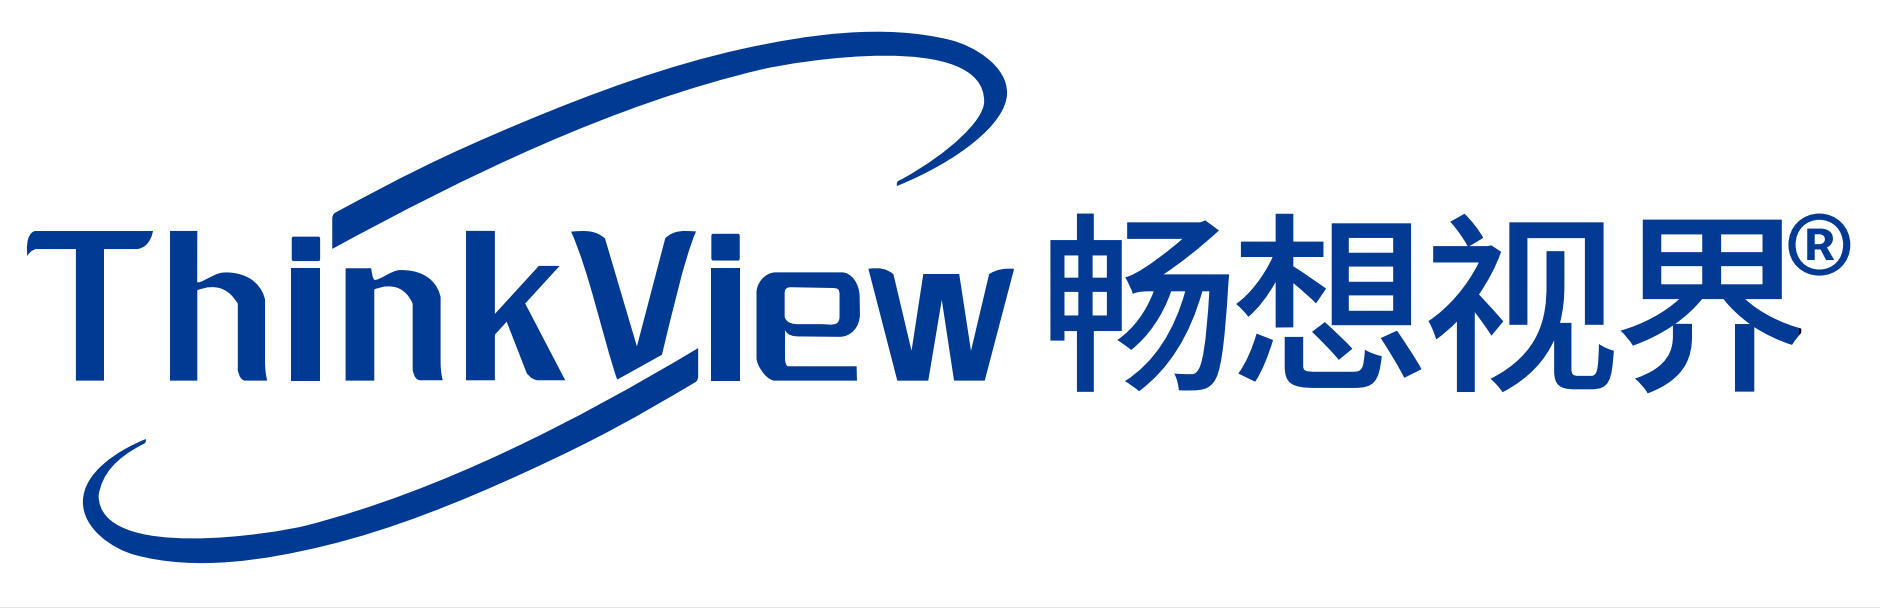 Tecnología Co., Ltd. de Shenzhen Thinkview